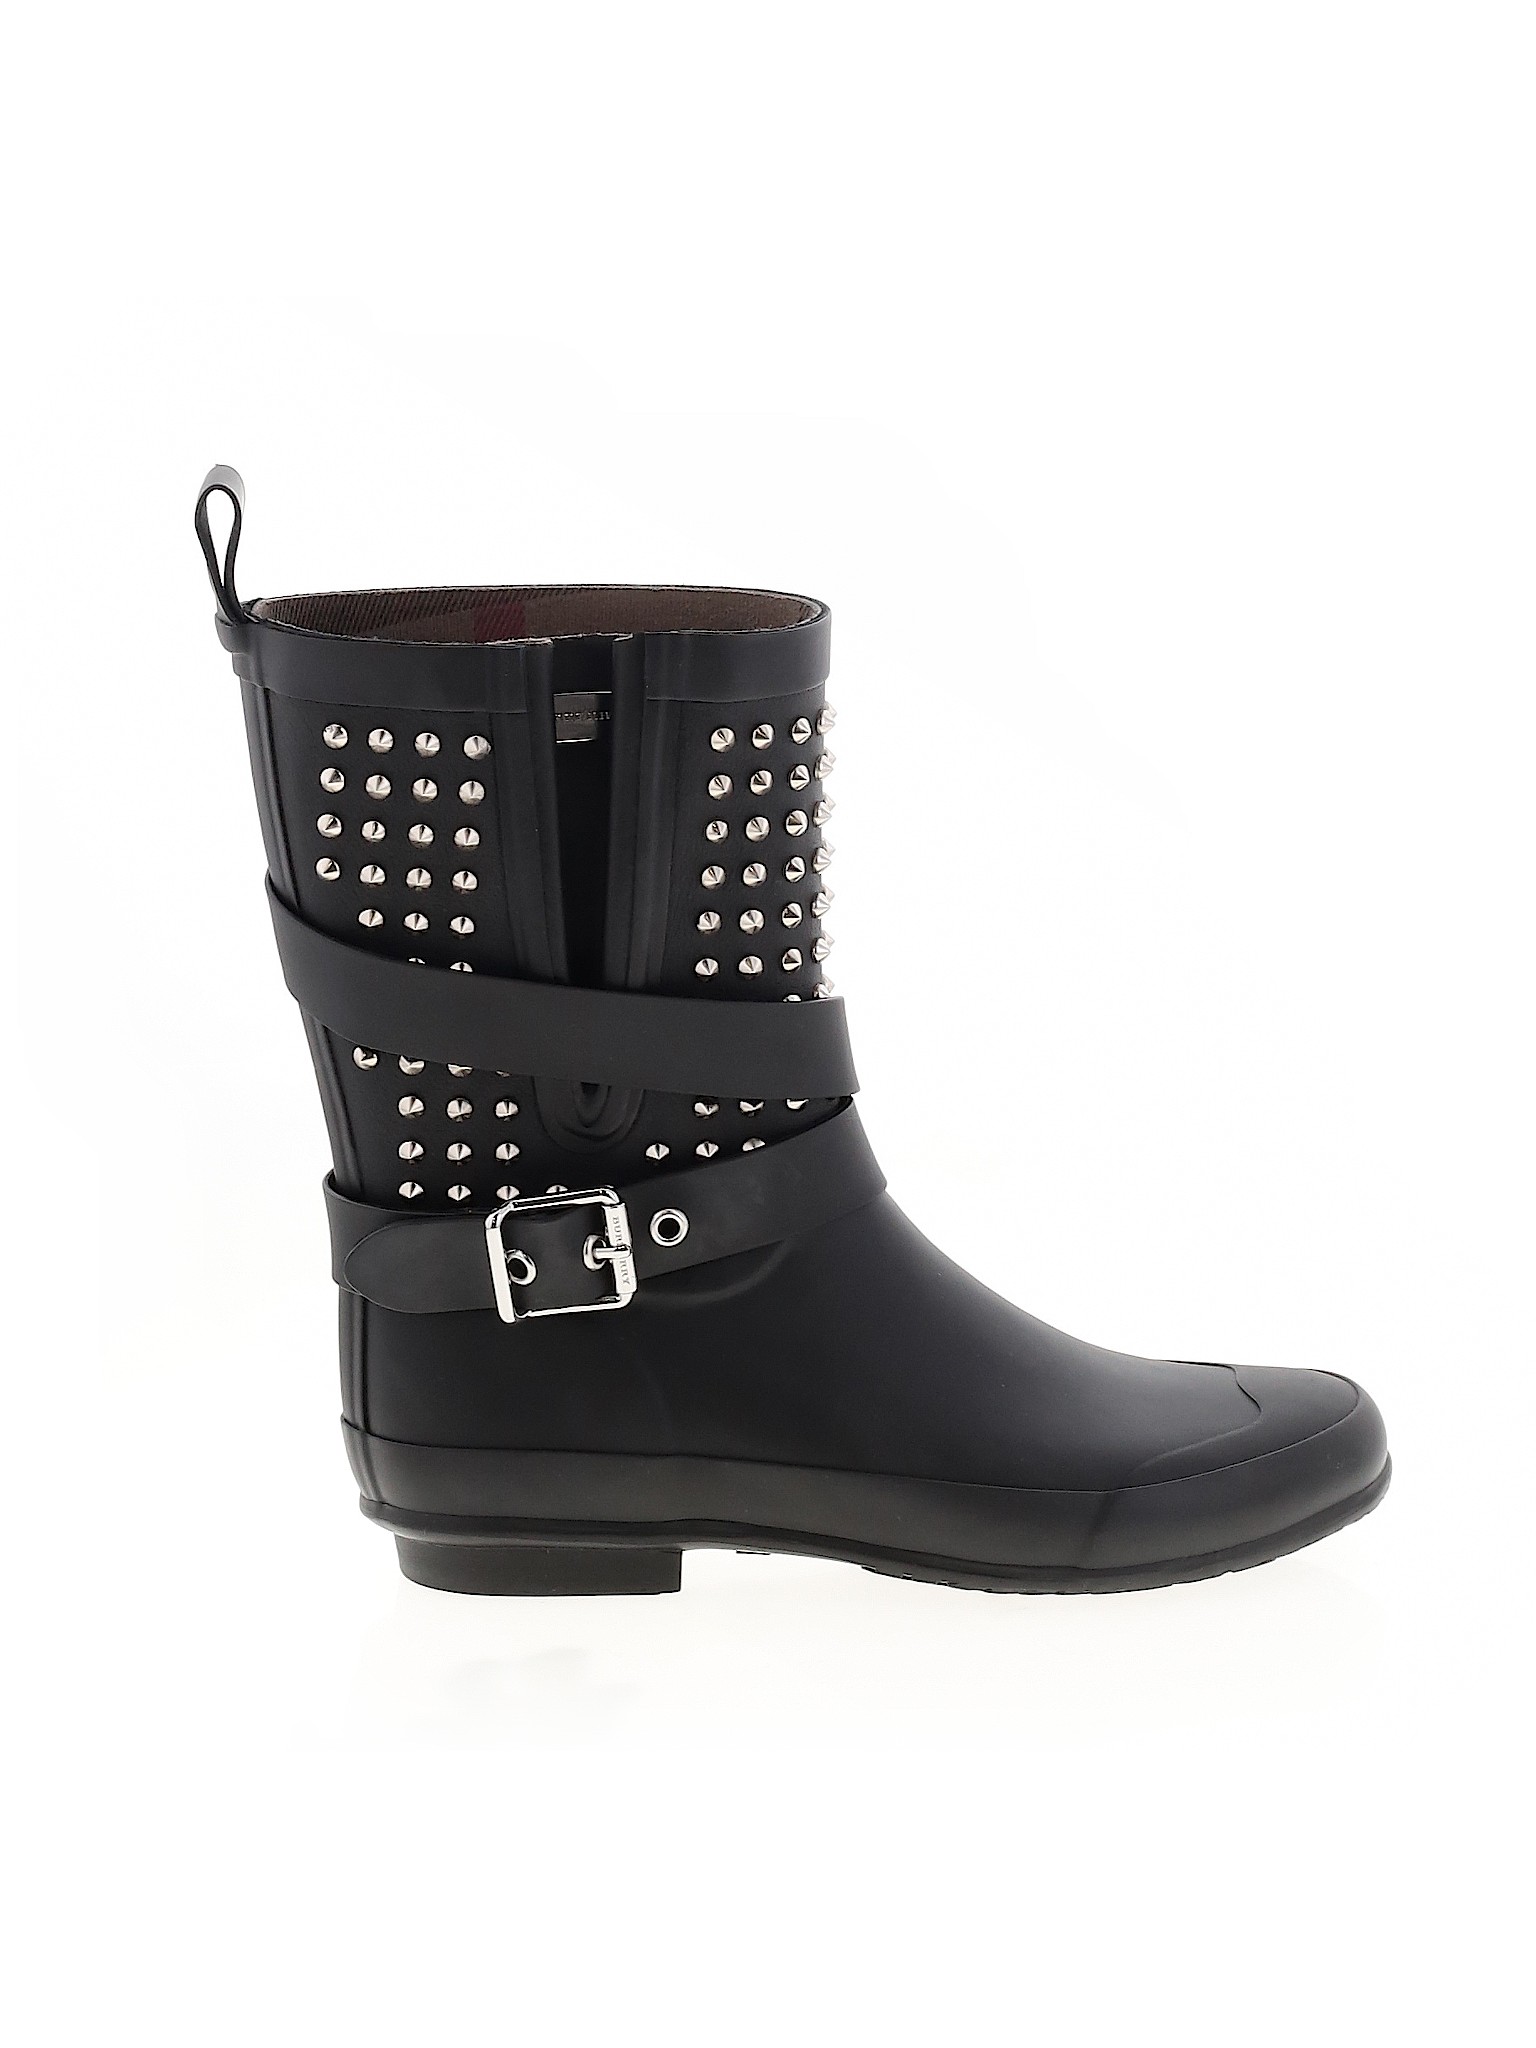 Burberry Women Black Rain Boots EUR 38 | eBay